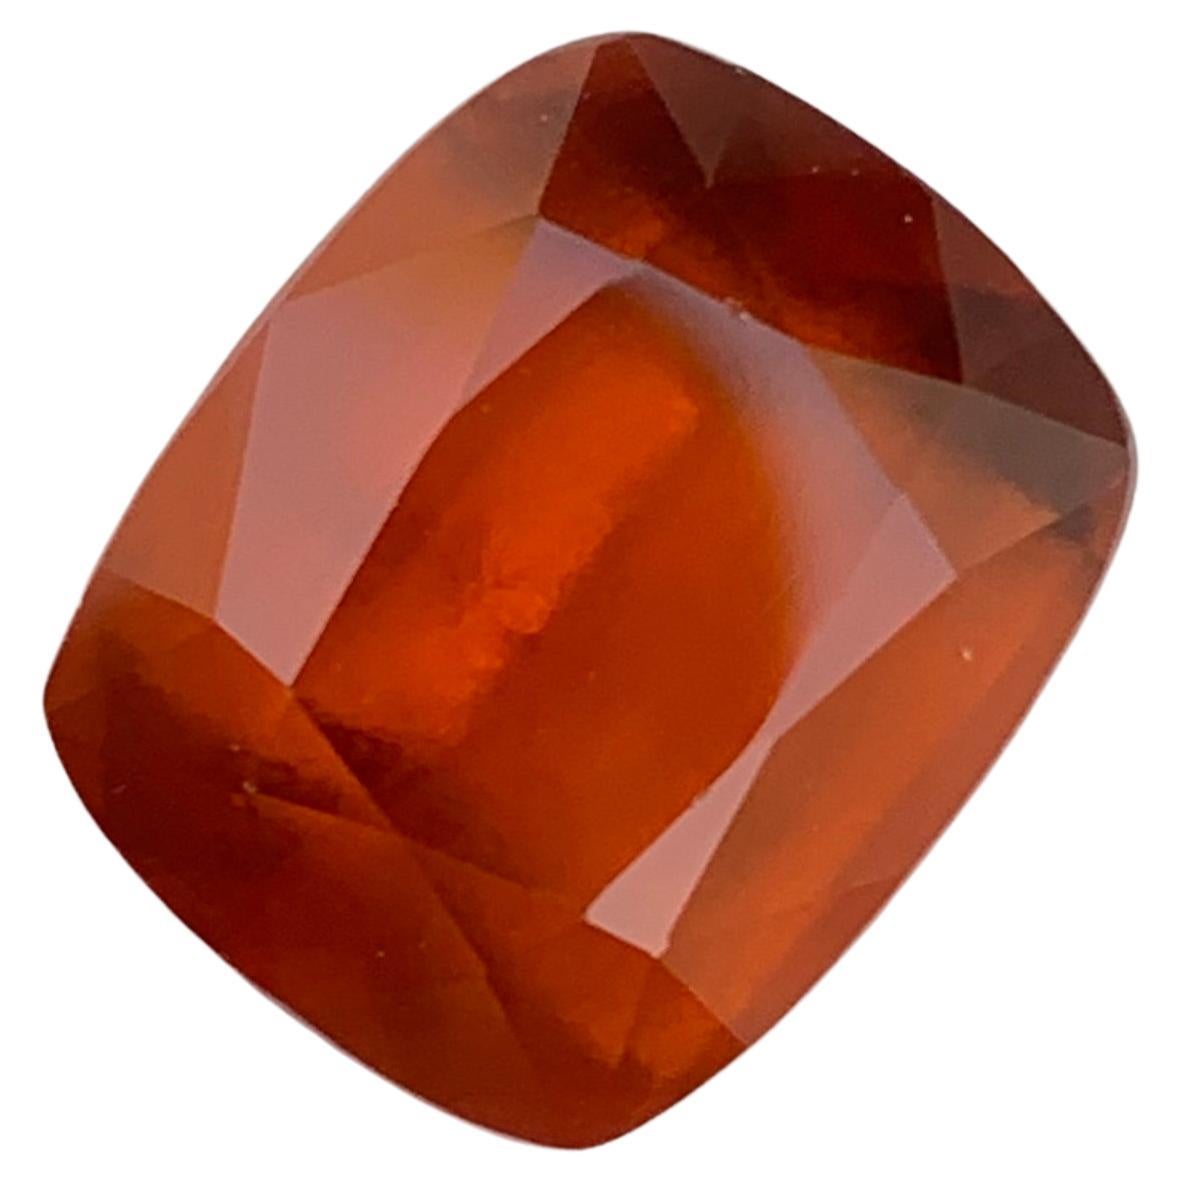 9.65 Carat Natural Loose Smoky Hessonite Garnet Ring Gemstone From Africa